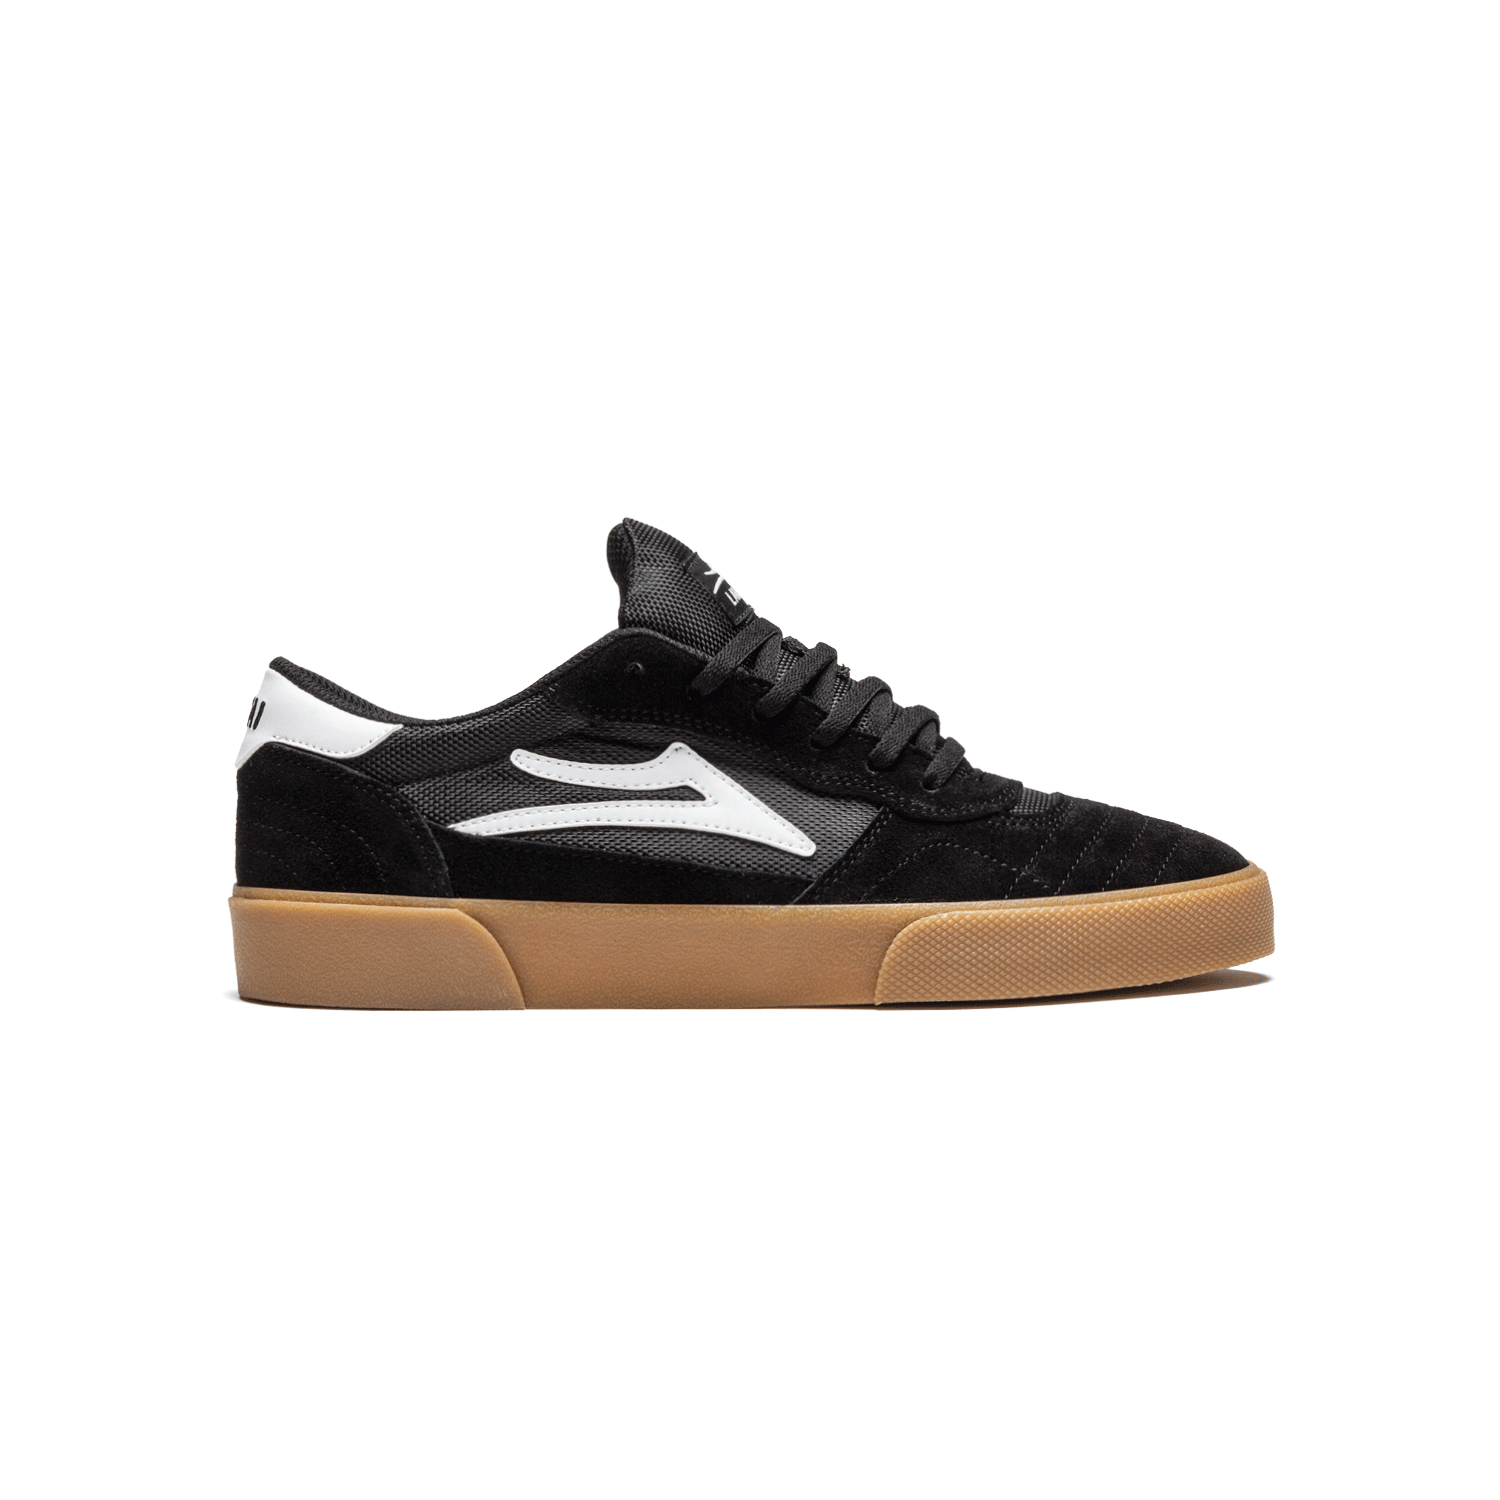 Lakai - Cambridge Suede Skateboard Shoes - Black/Gum